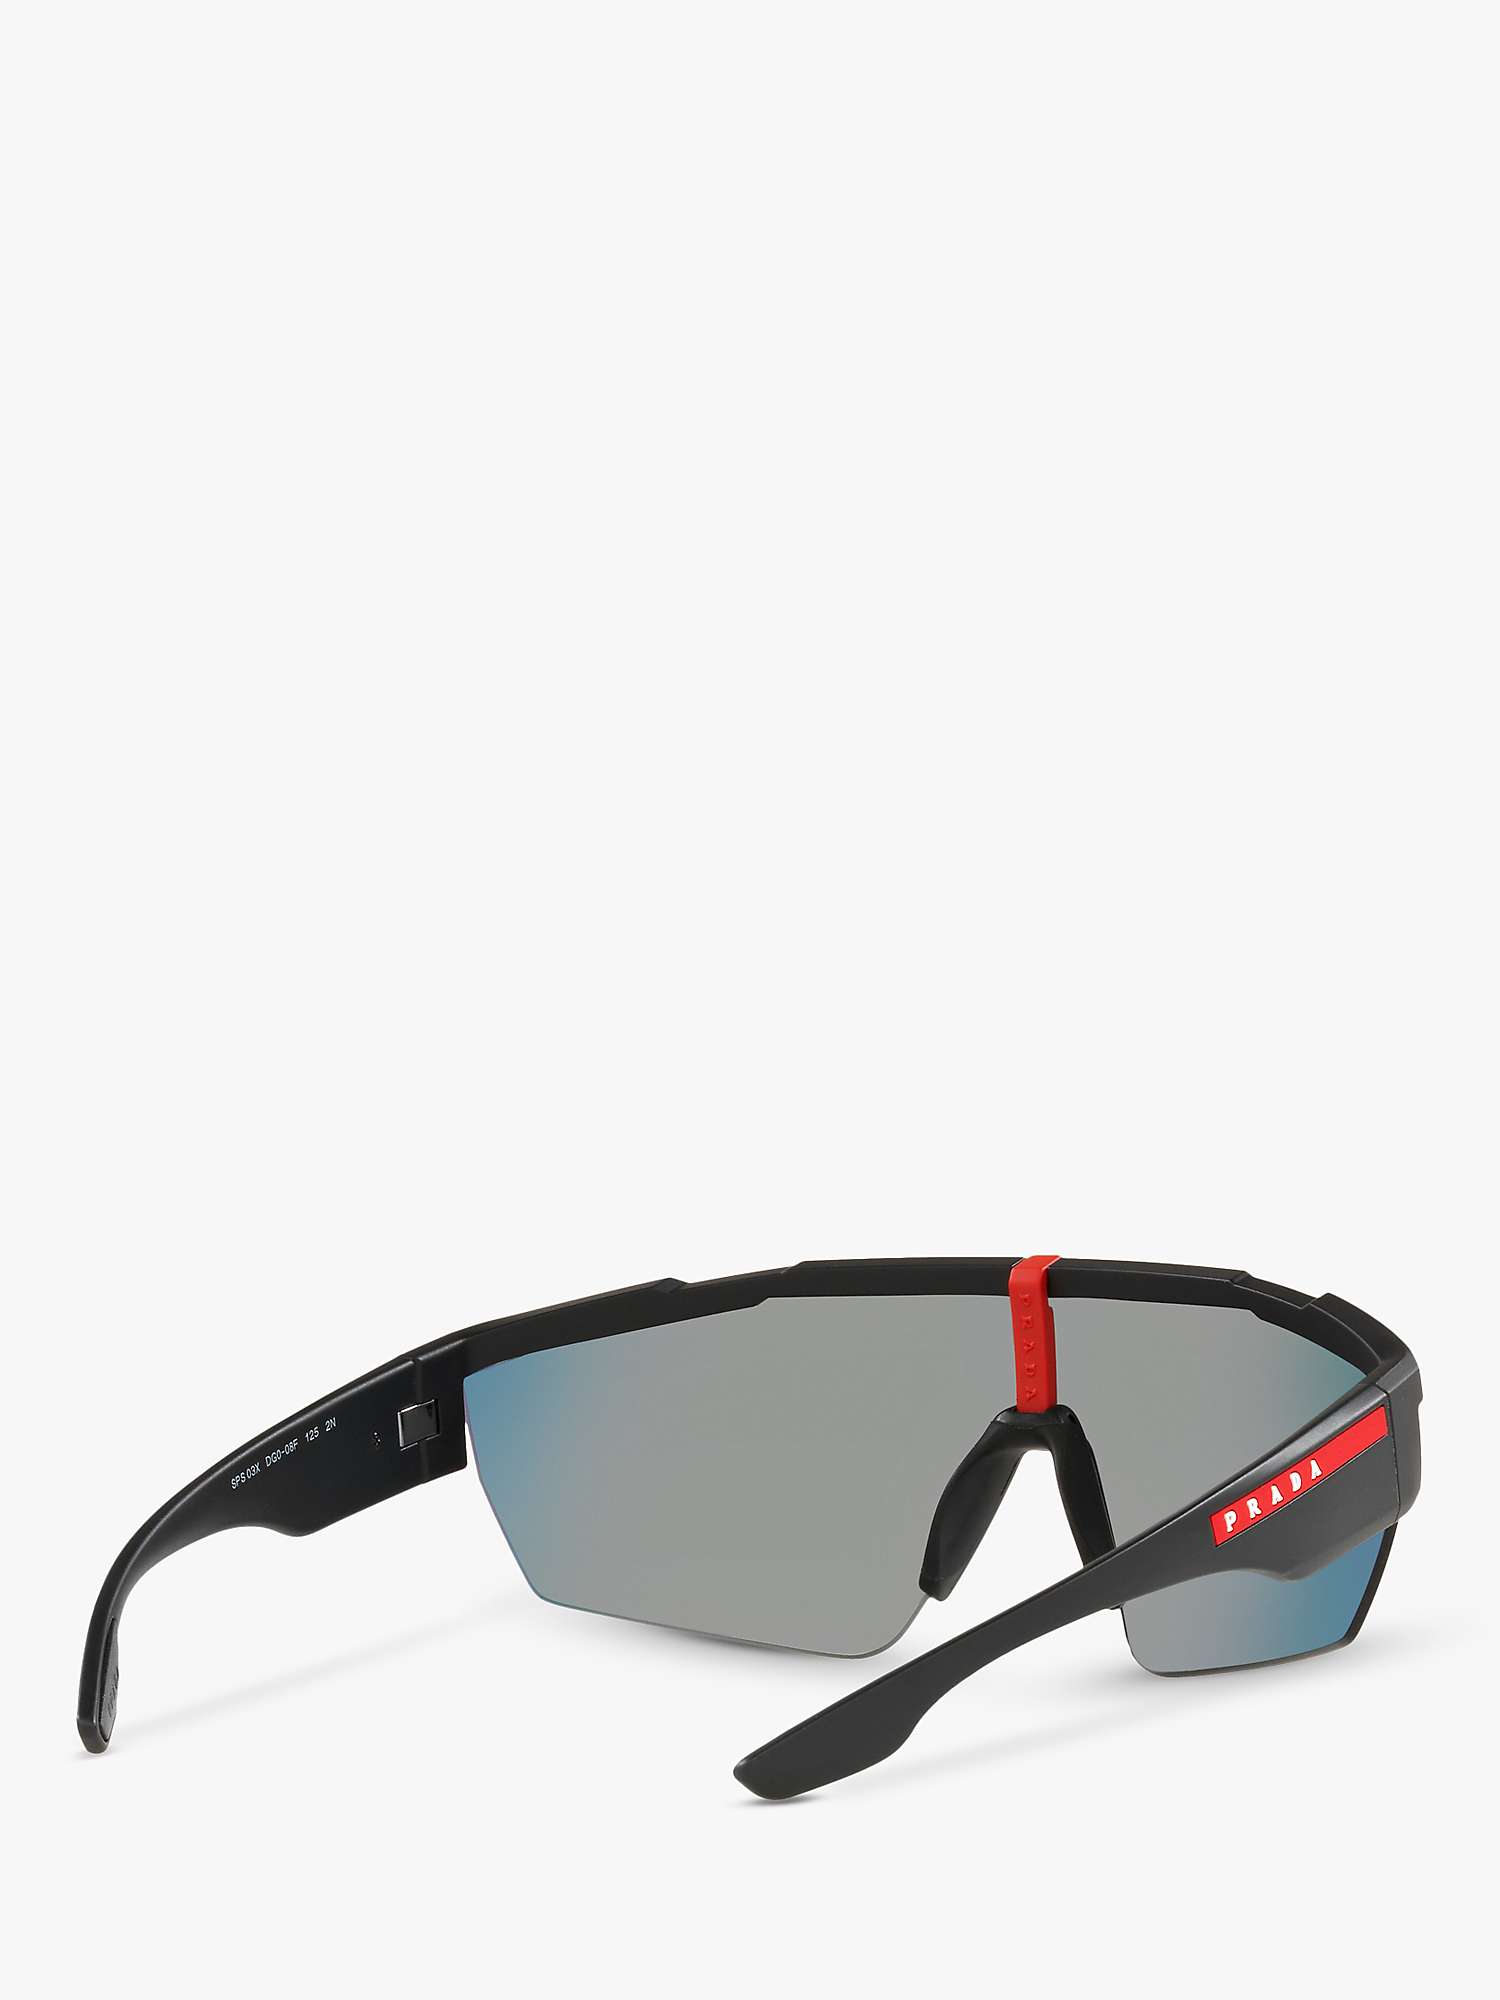 Buy Prada Linea Rossa PS 03XS Men's Wrap Sunglasses, Black Rubber/Blue Online at johnlewis.com